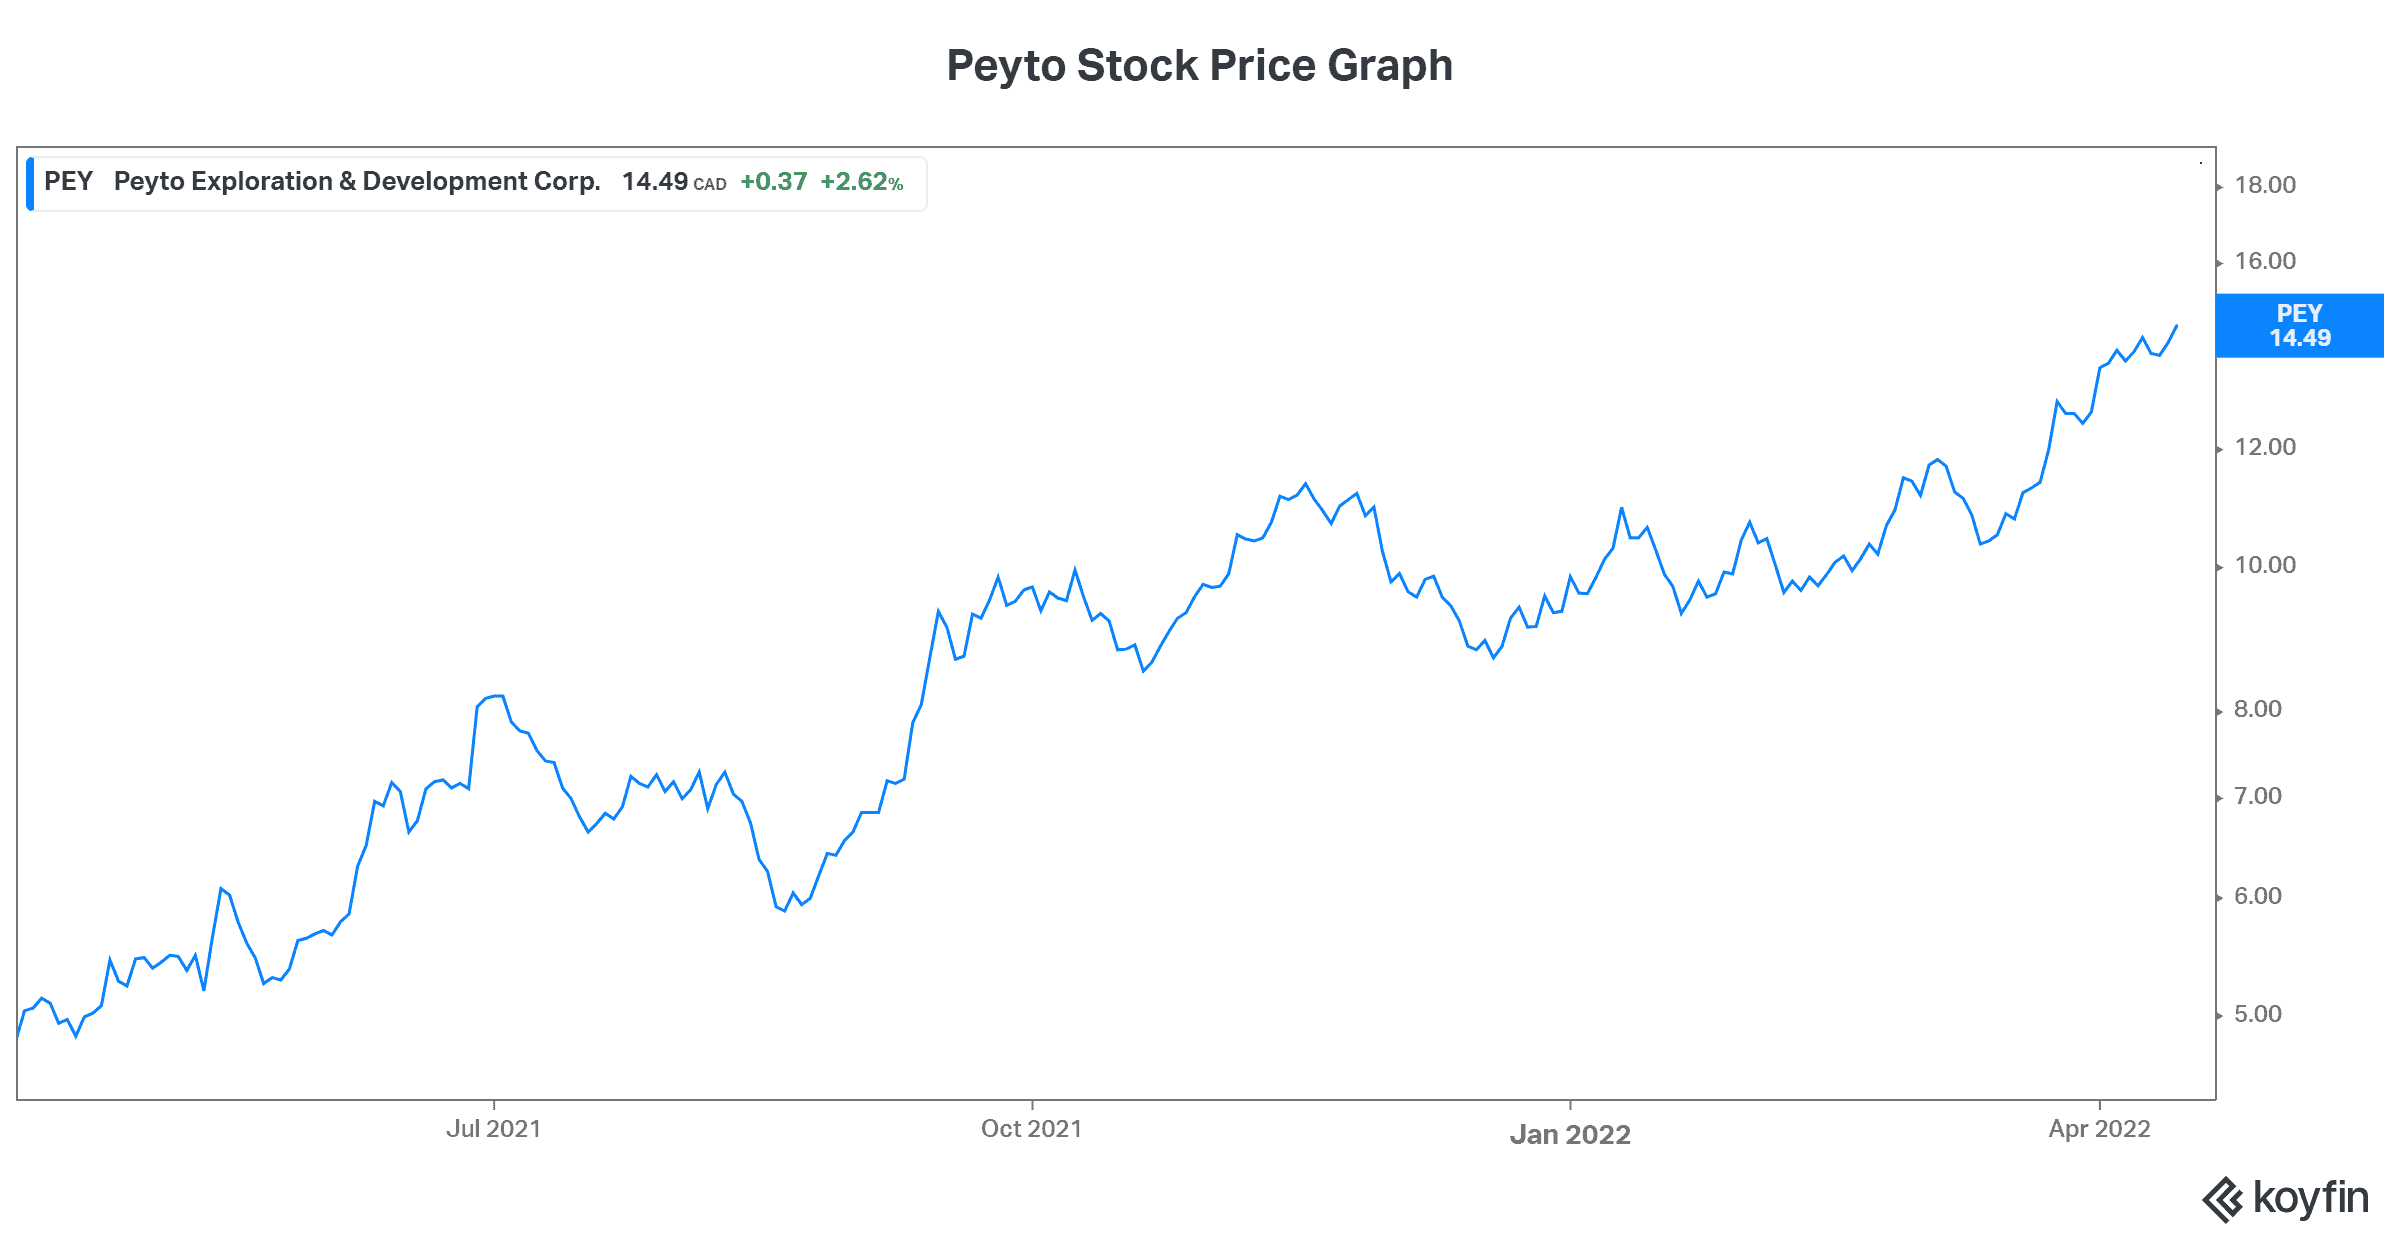 Energy stocks Peyto